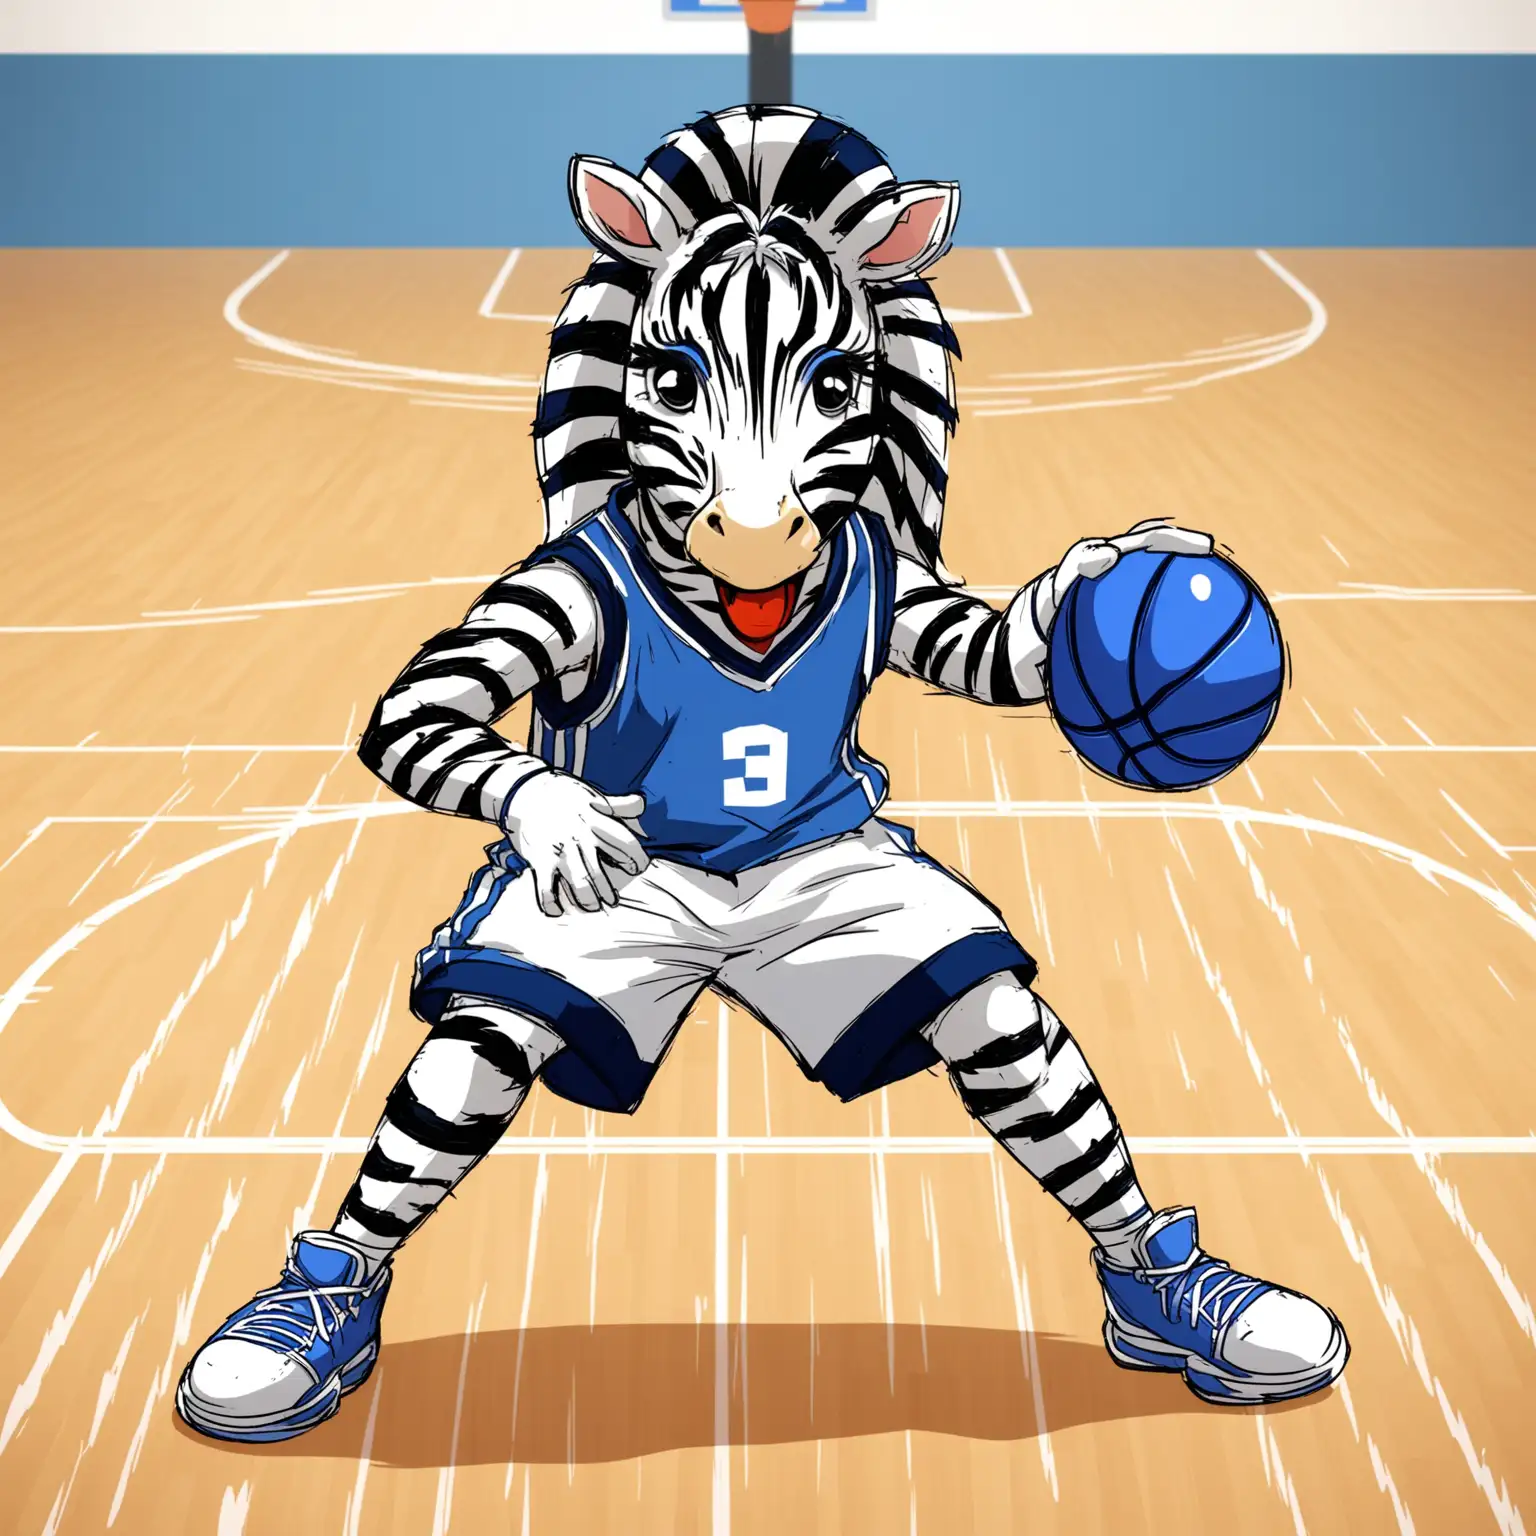 Anime Zebra Cartoon Character Playing Basketball on Basketball Court